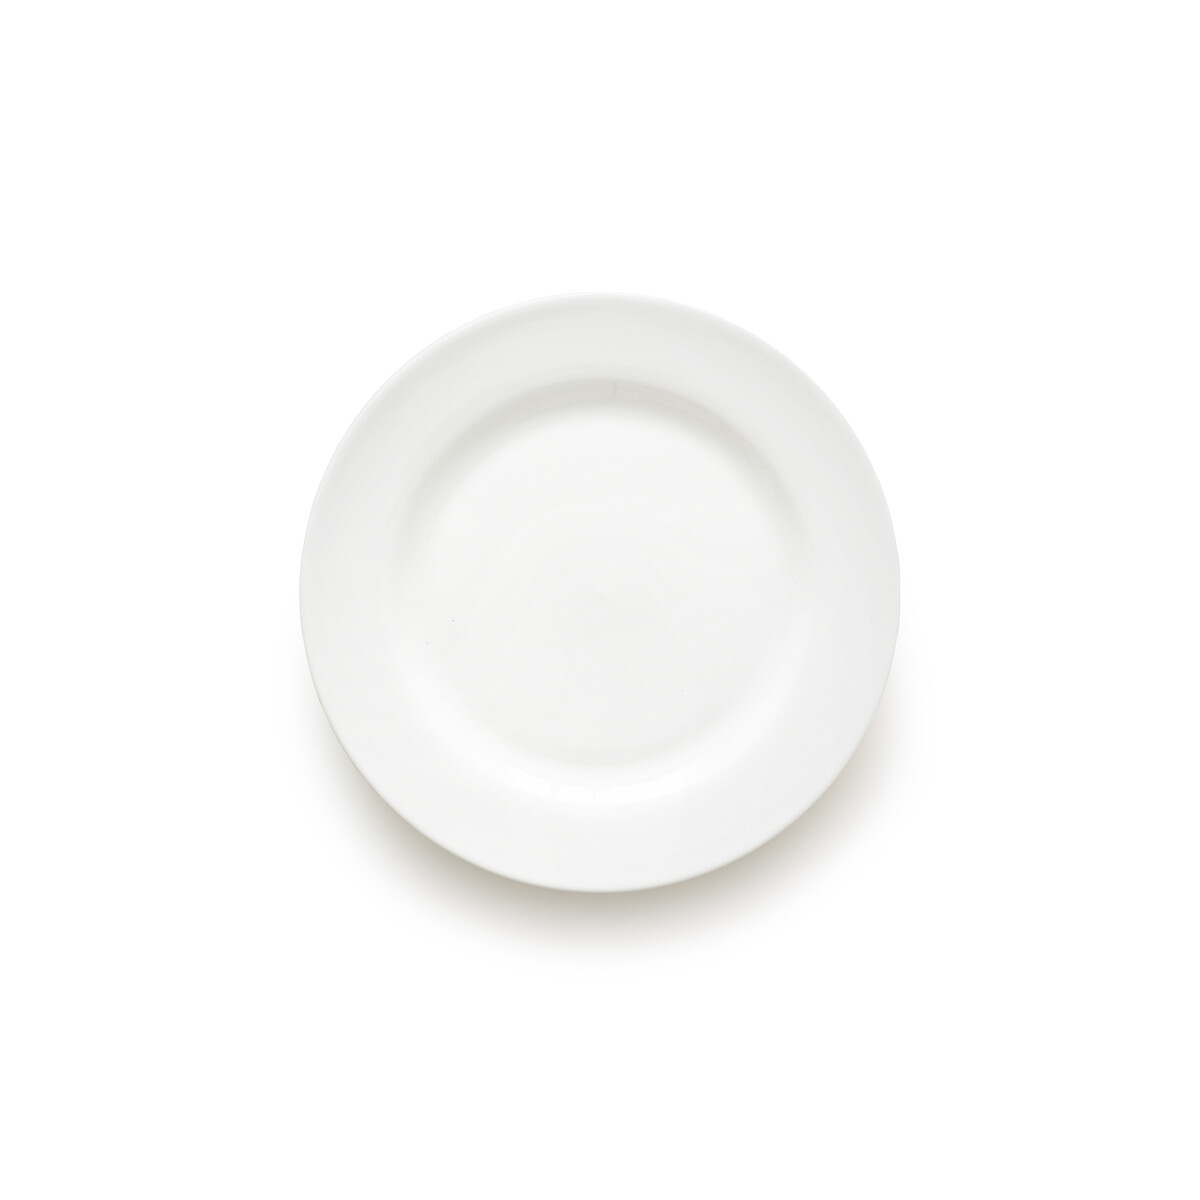 Комплект из четырех десертных тарелок из фарфора Ginny единый размер белый салатница laredoute салатница из фарфора ginny единый размер белый